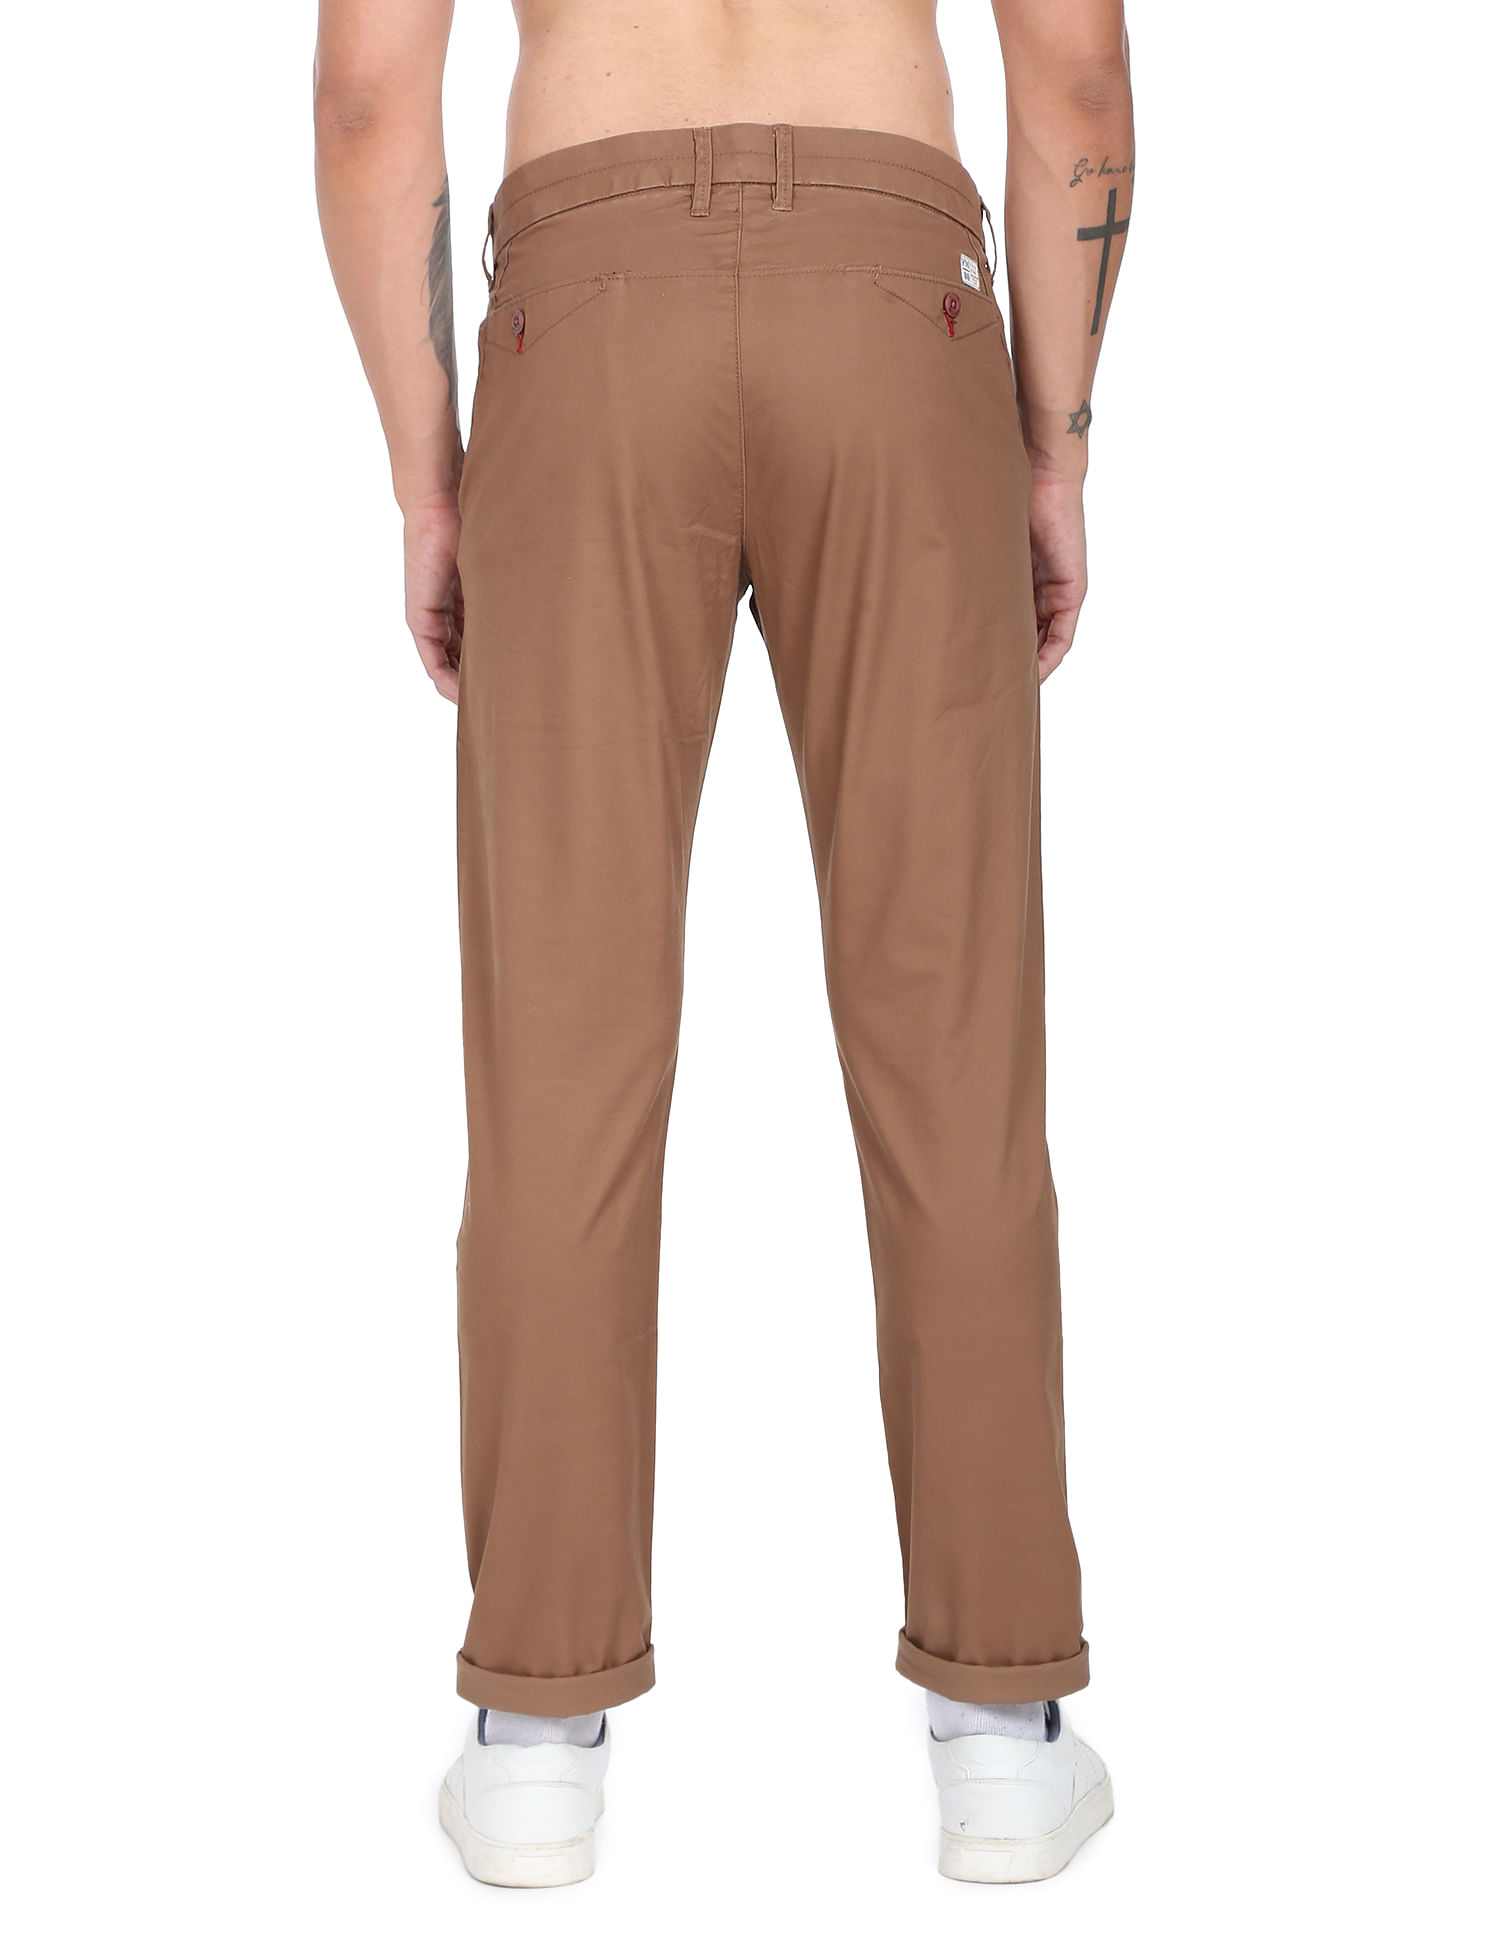 Men Khaki Pants Outfits - 36 Best Ways to Style Khakis | Khaki pants  outfit, Khaki pants men, Pants outfit men